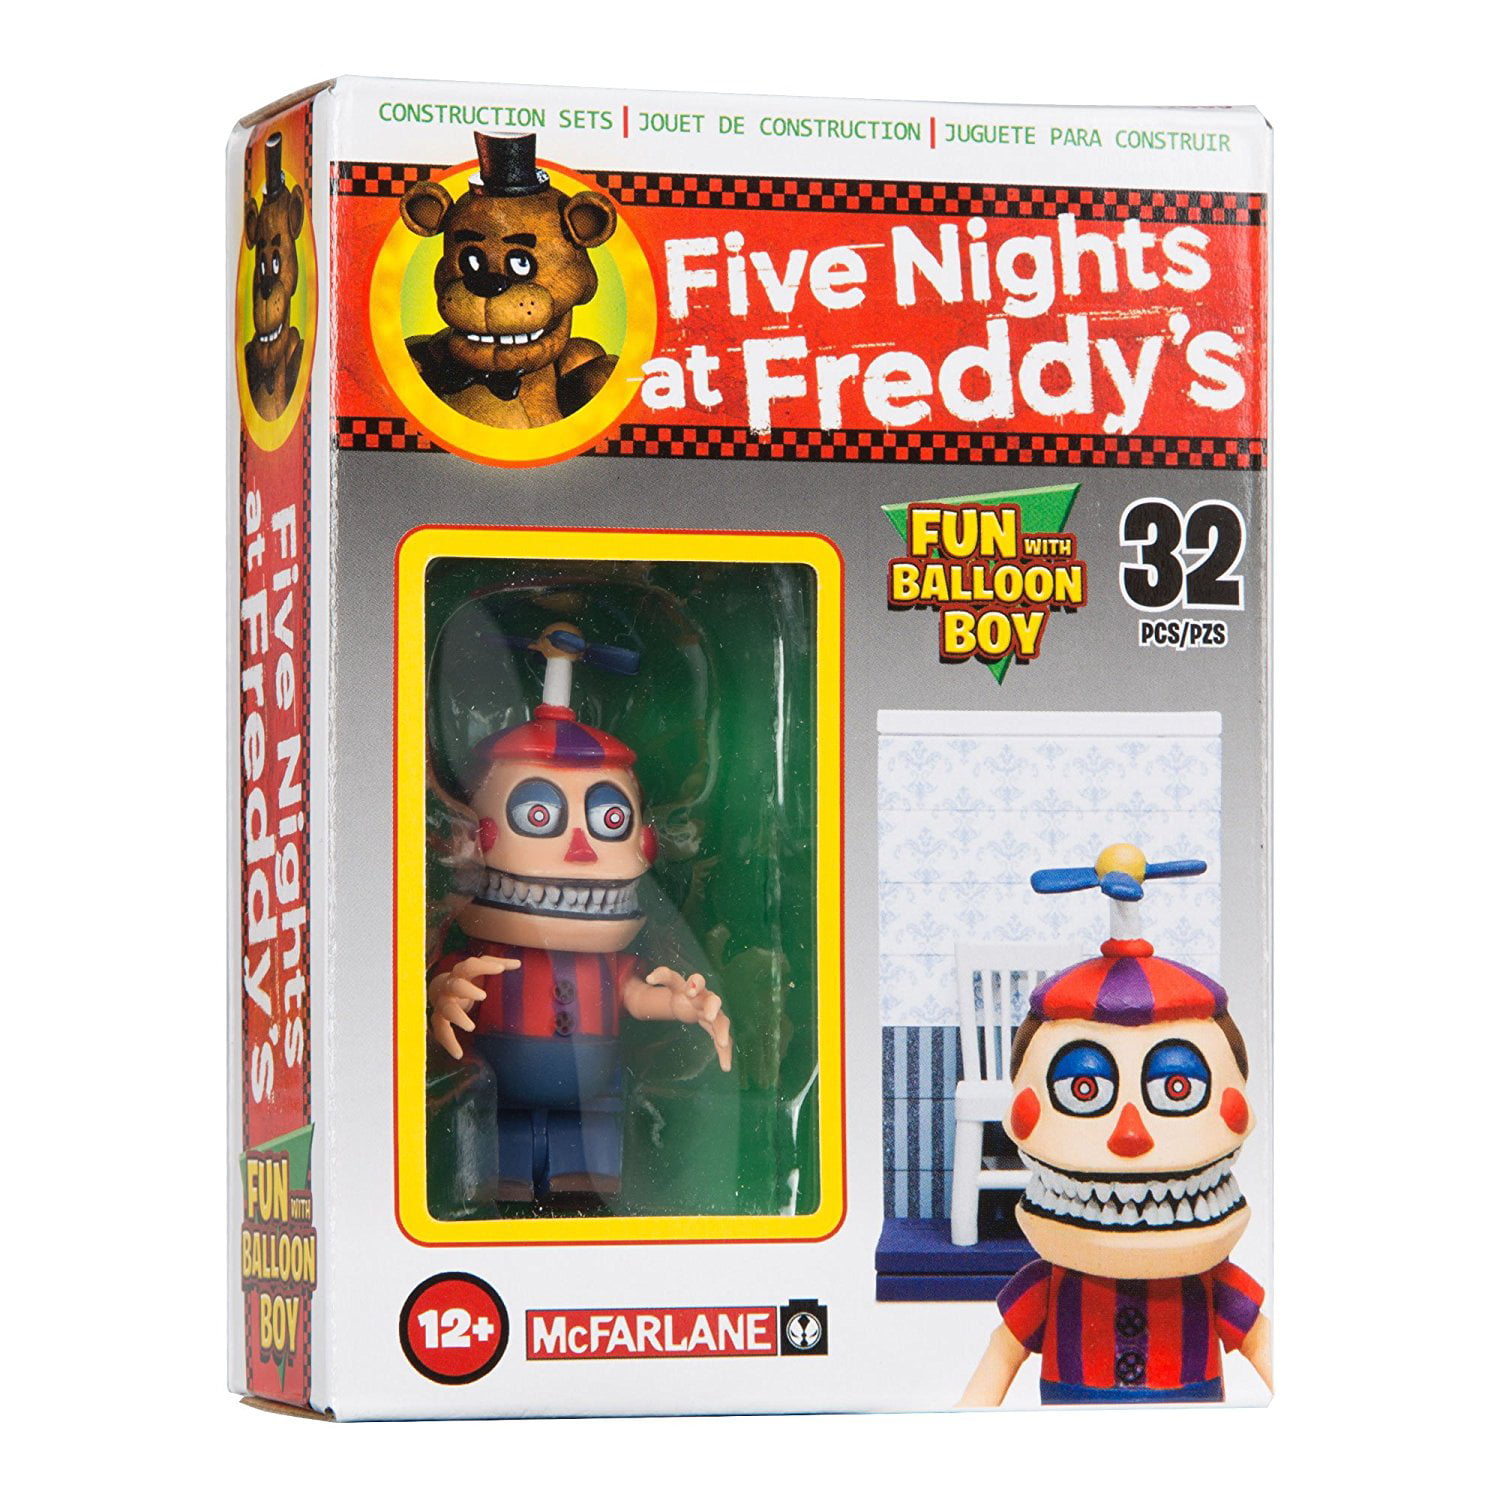  Funko POP 12 Statue: Five Nights at Freddy's - Freddy